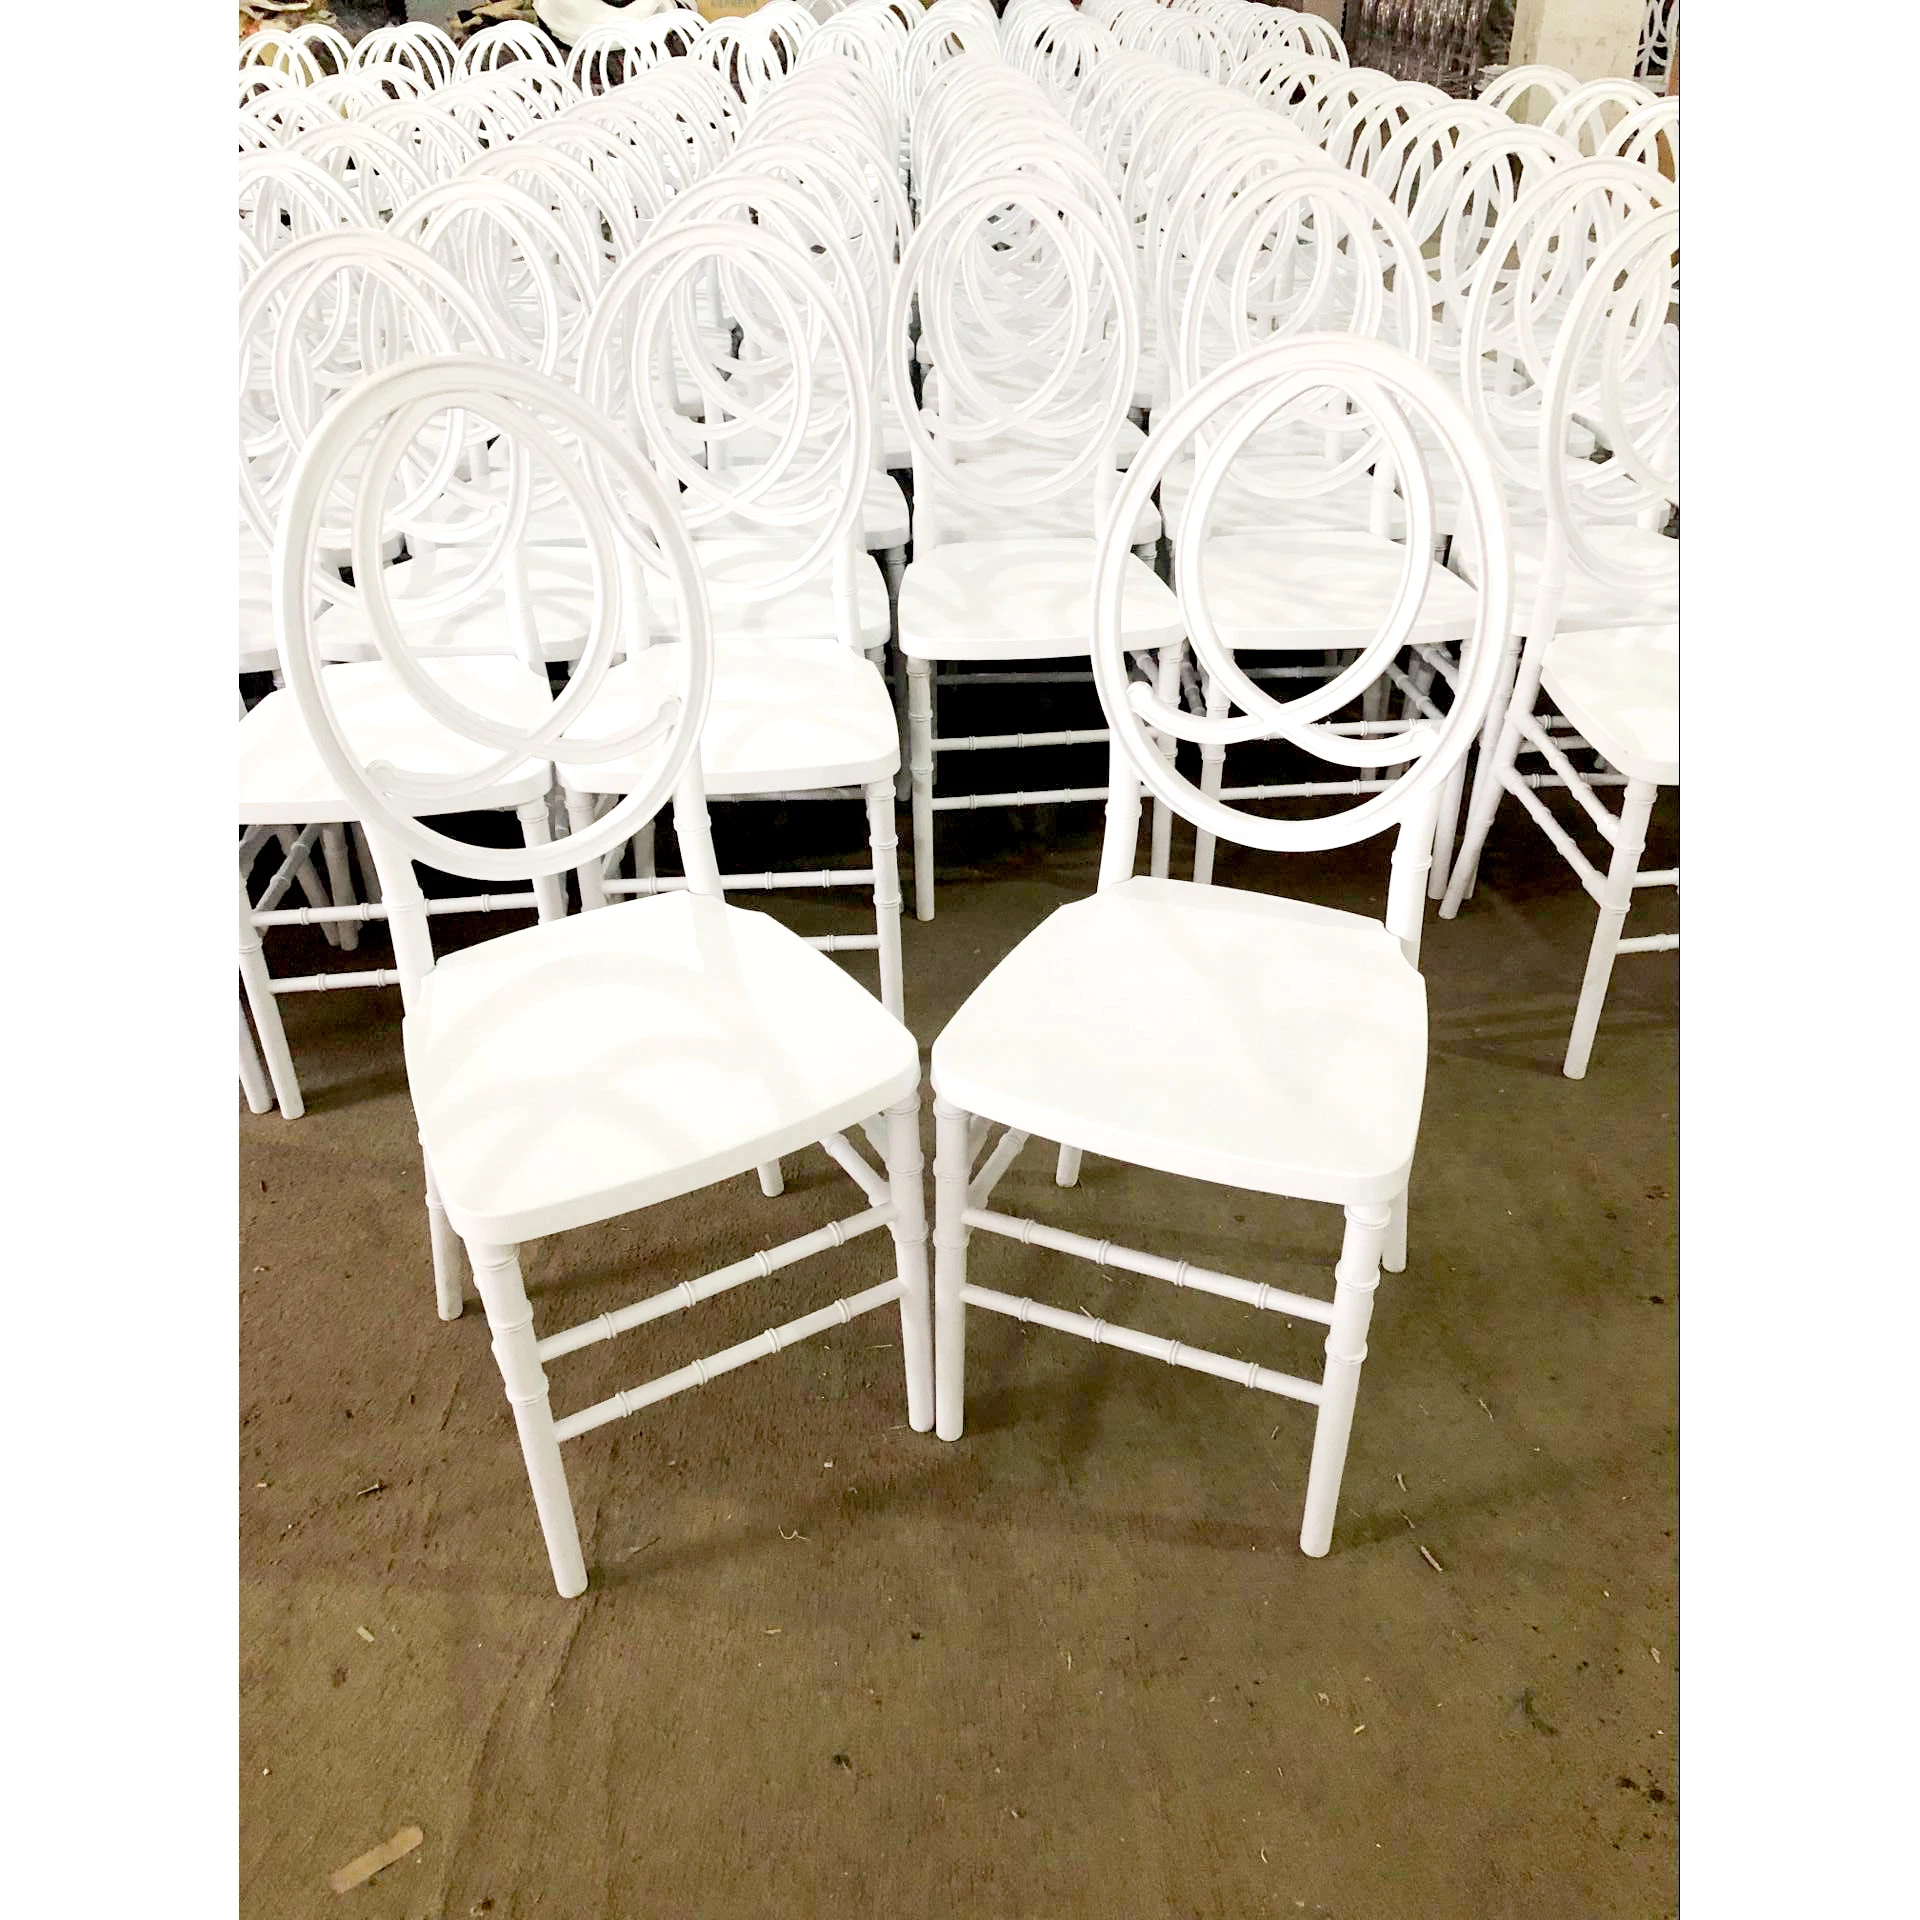 
wholesale Black Plastic resin round back phoenix event wedding chairs  (62026224155)